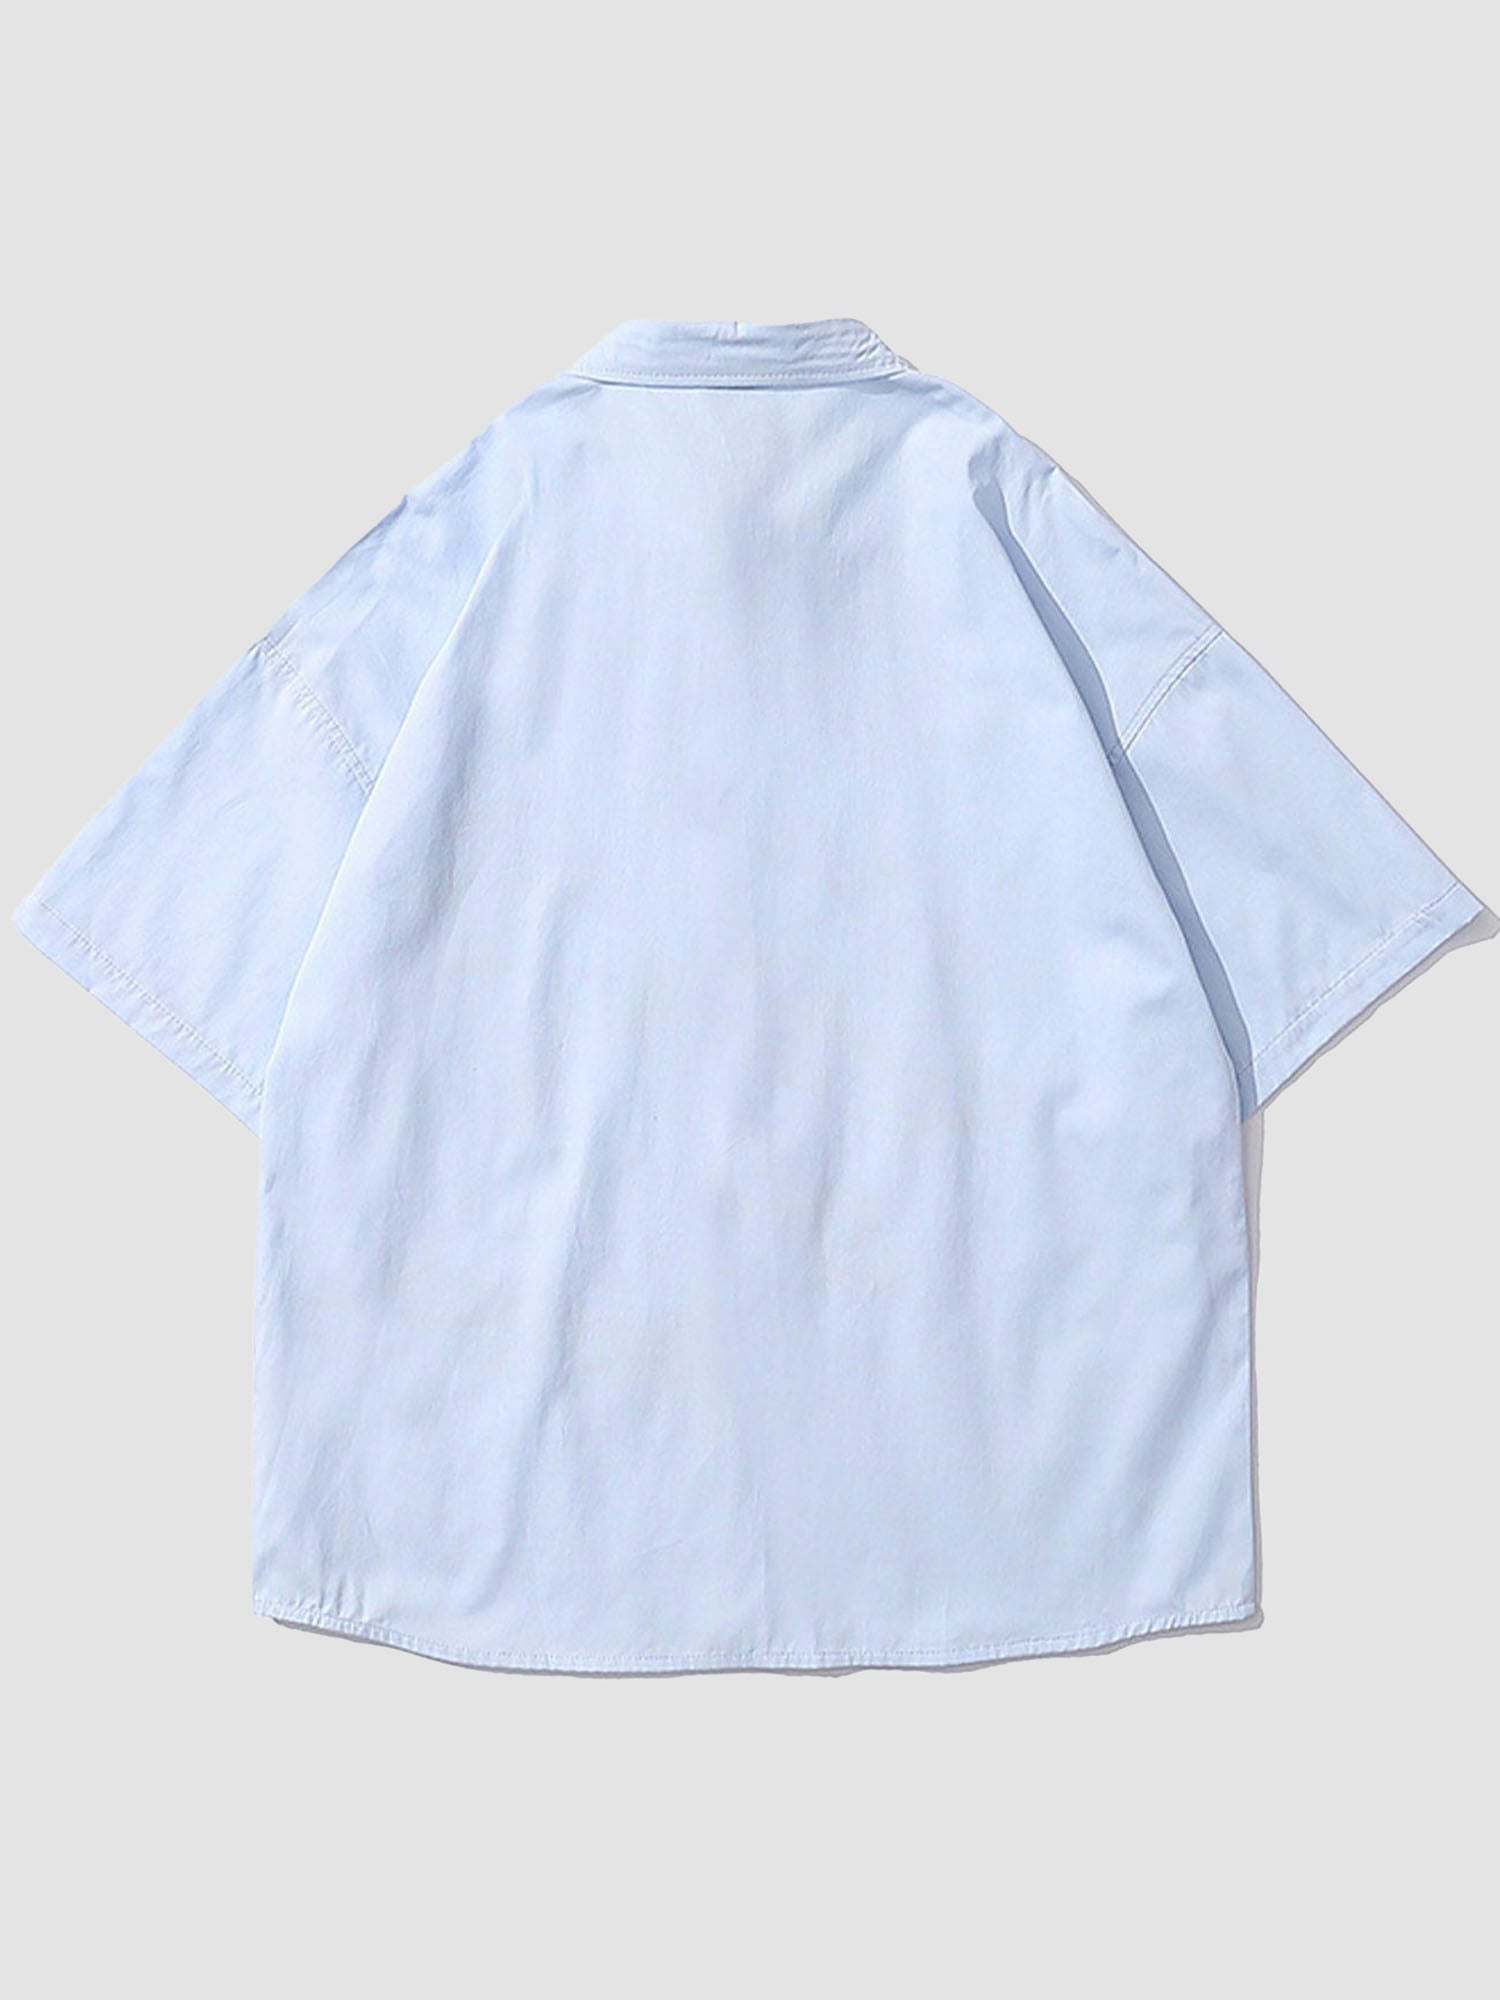 JUSTNOTAG Bear Astronaut Print Short Sleeve Shirts